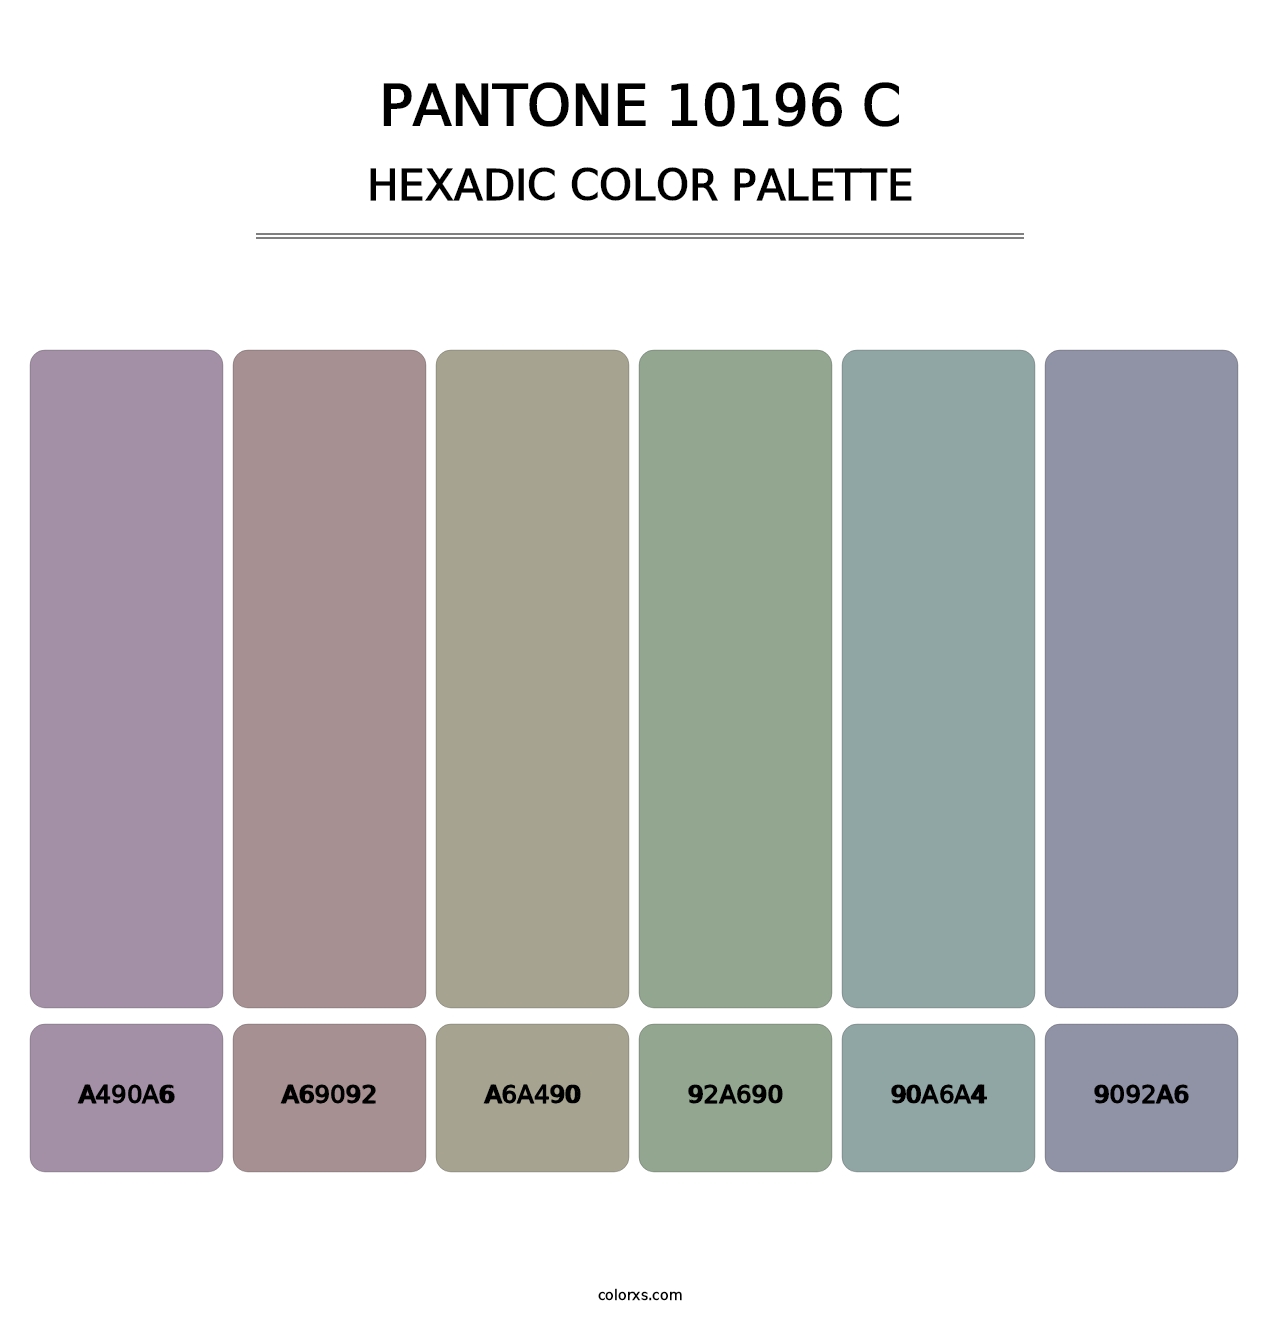 PANTONE 10196 C - Hexadic Color Palette